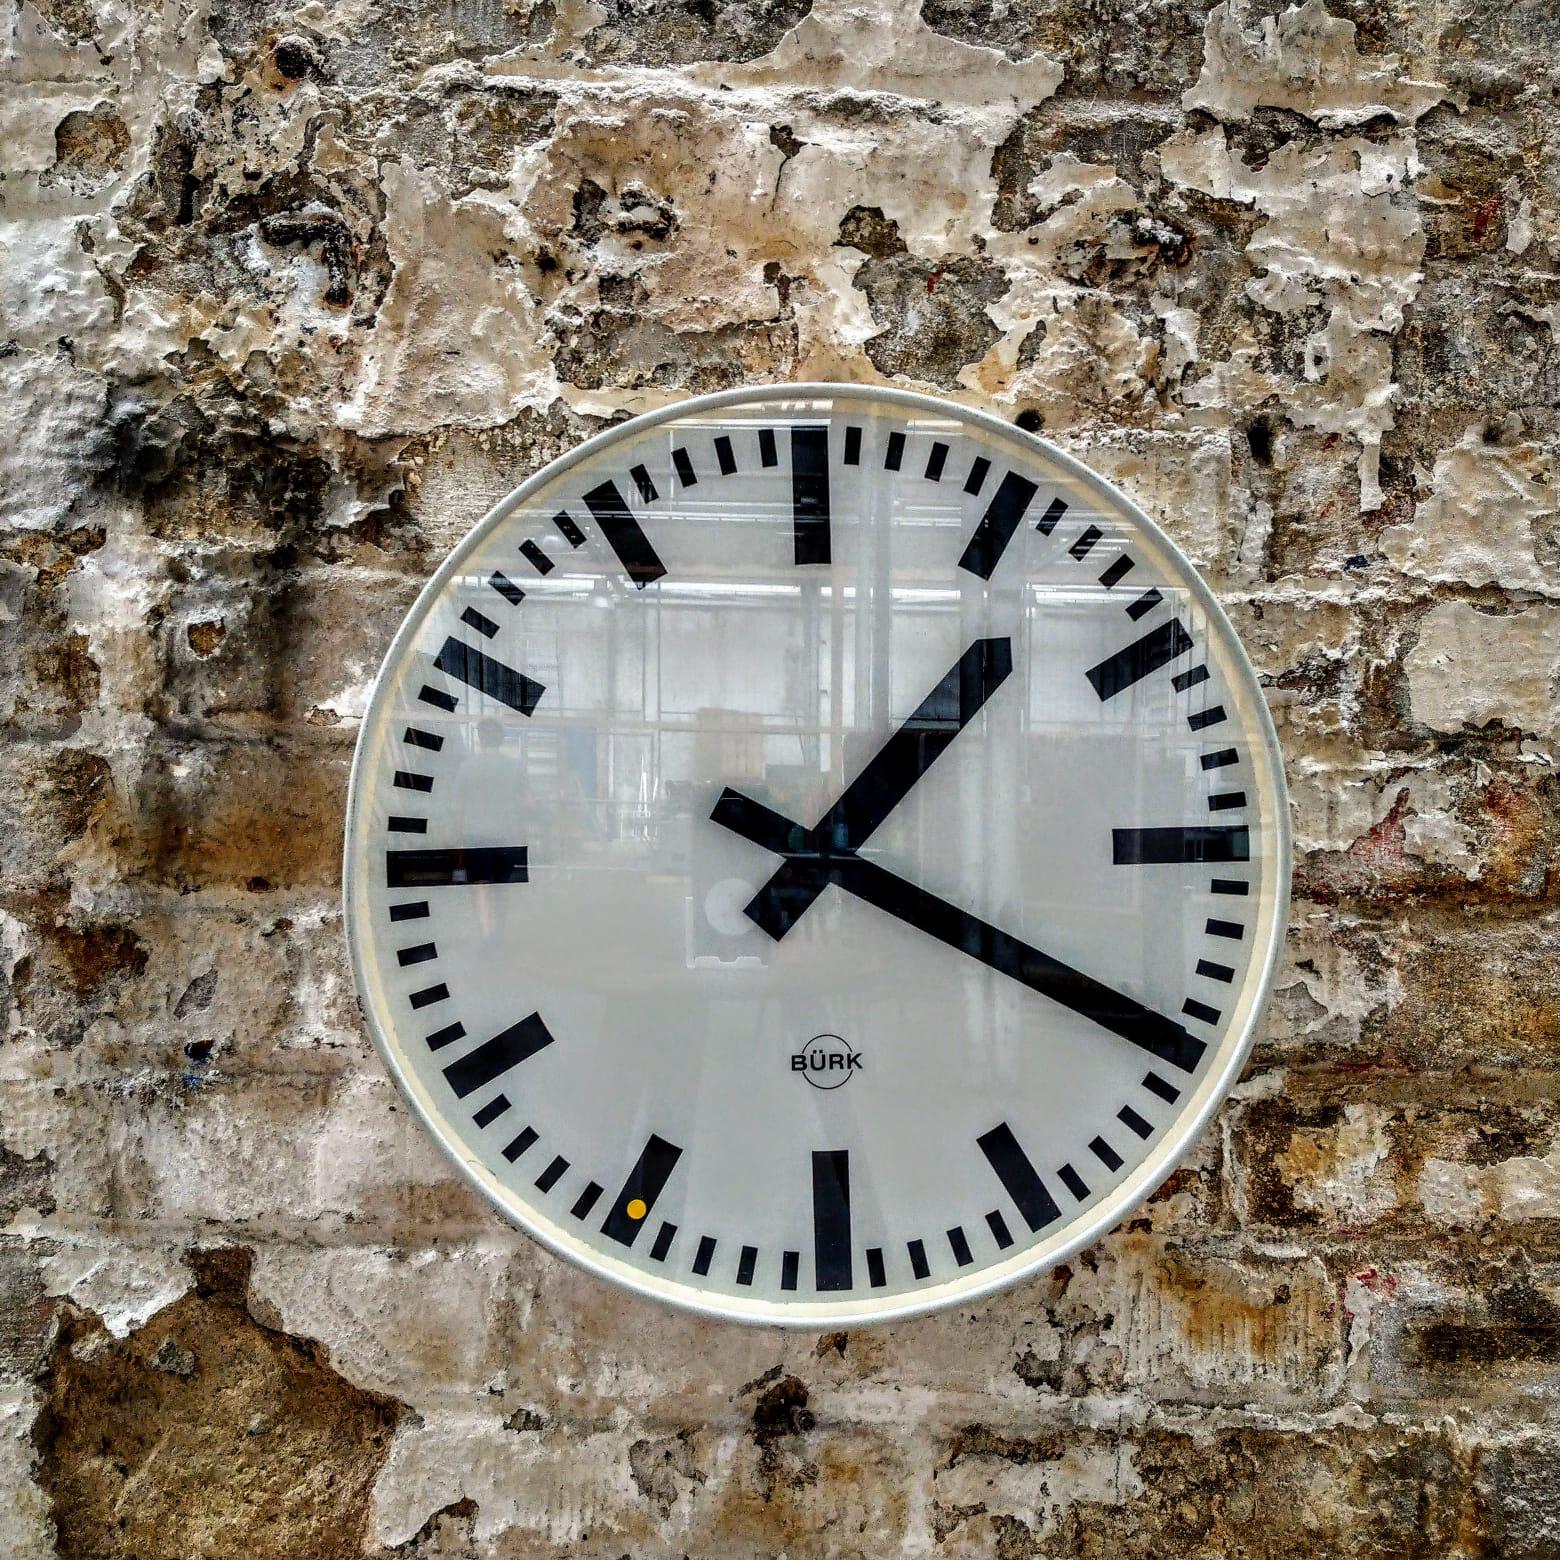 German clock by Bürk